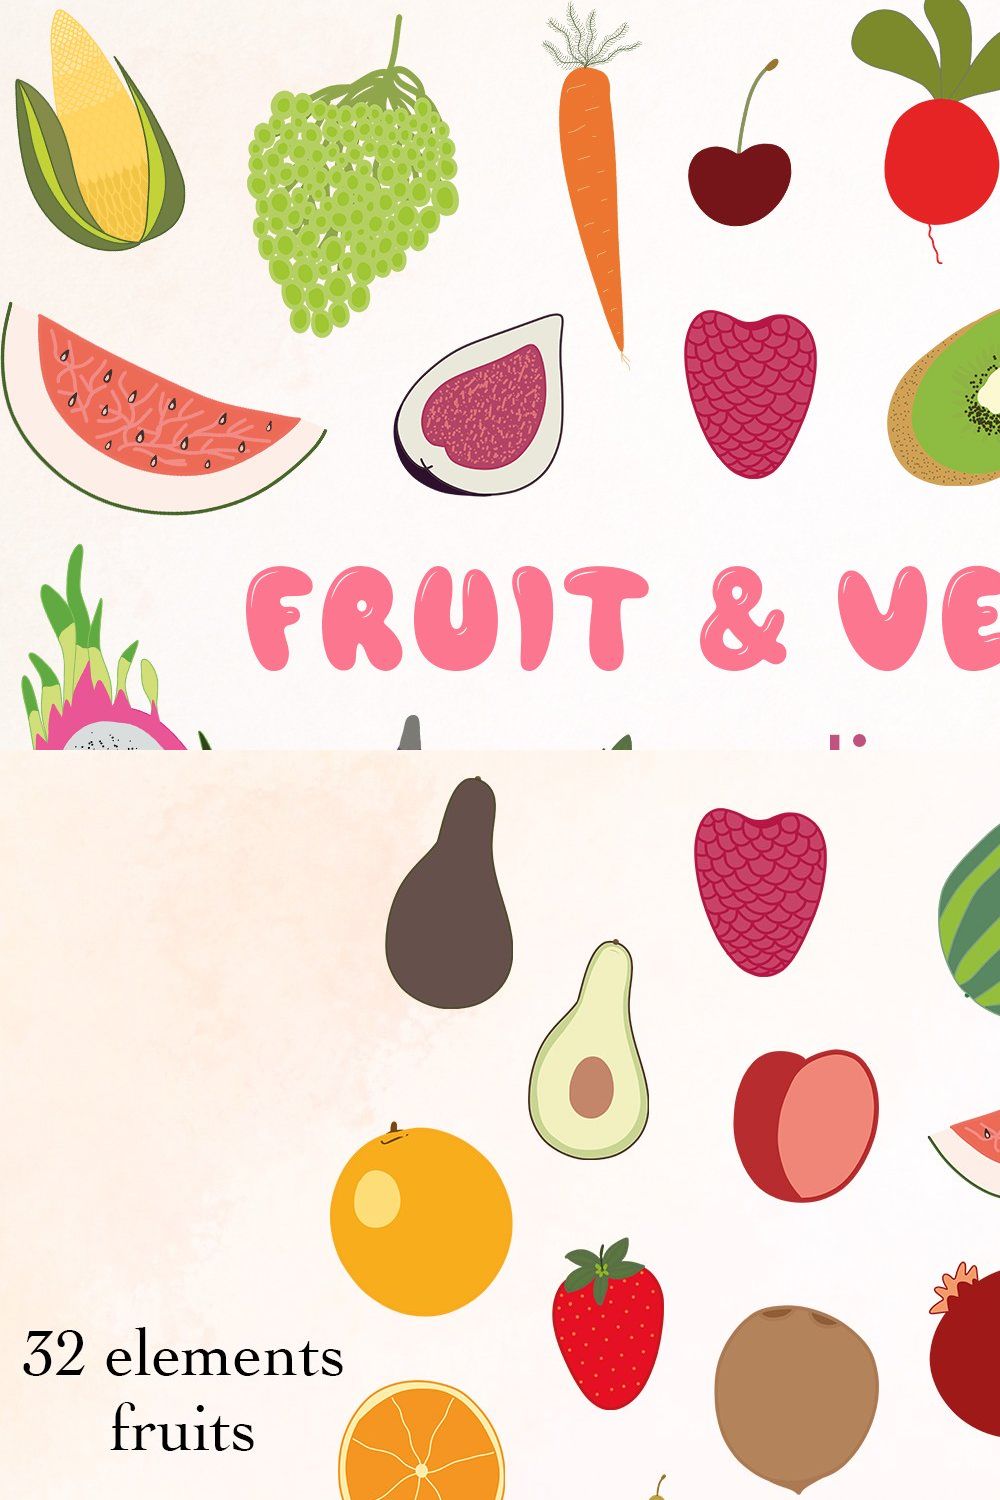 Fruit & Vegetables clipart Vector pinterest preview image.